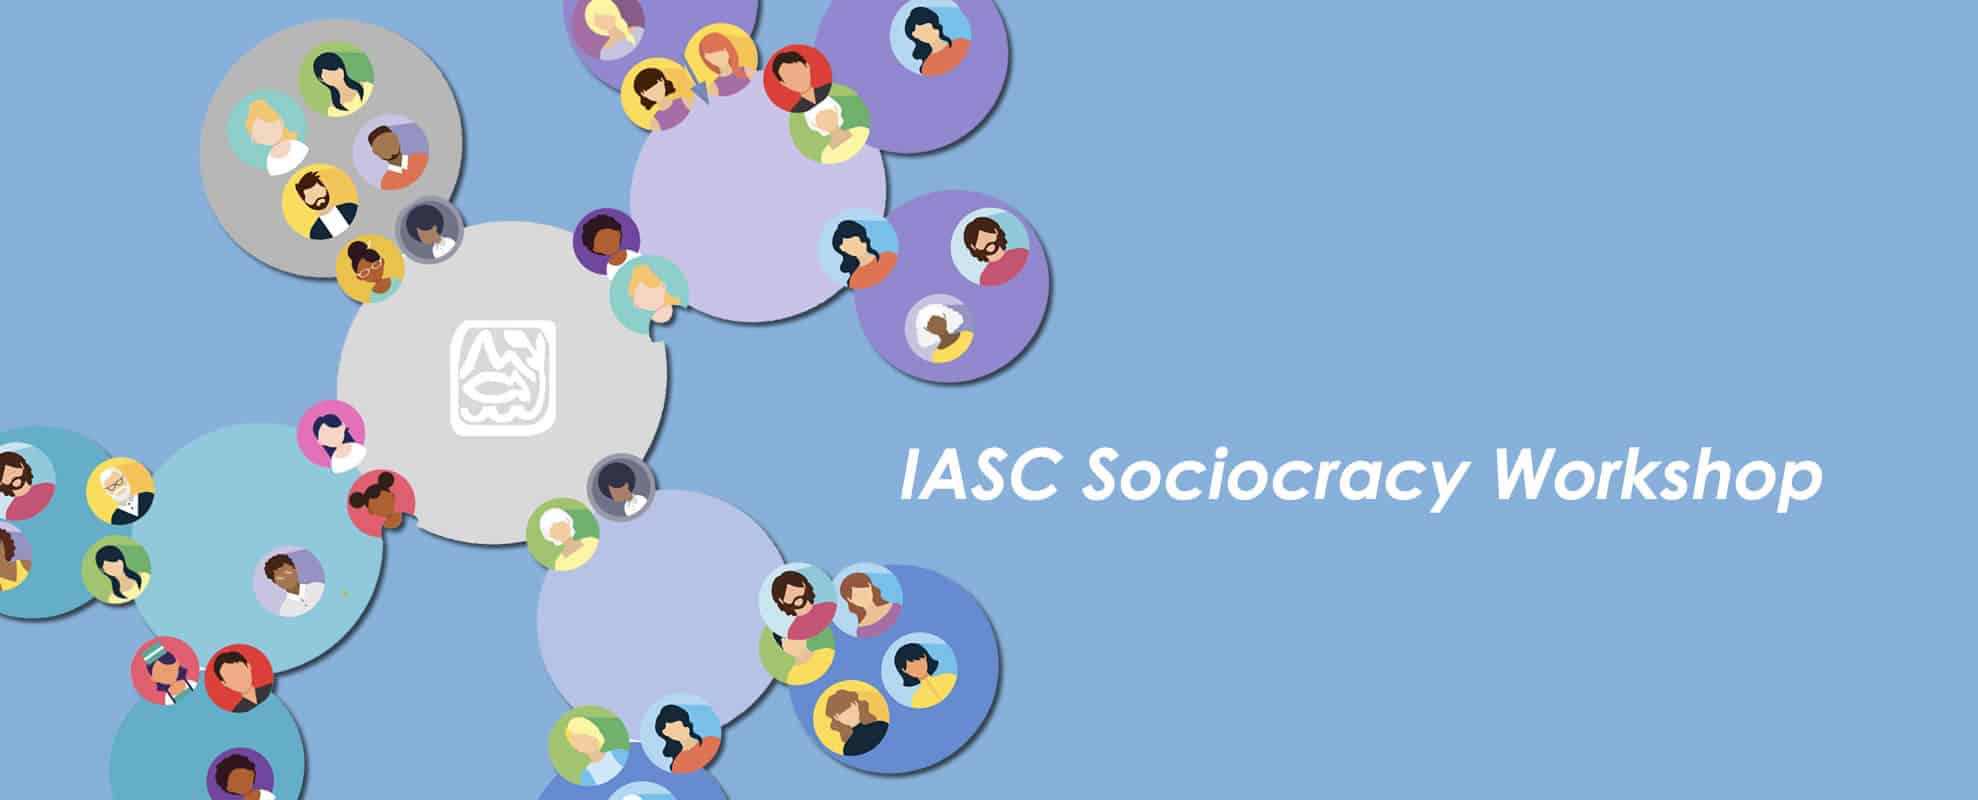 IASC Sociocracy Workshop Banner